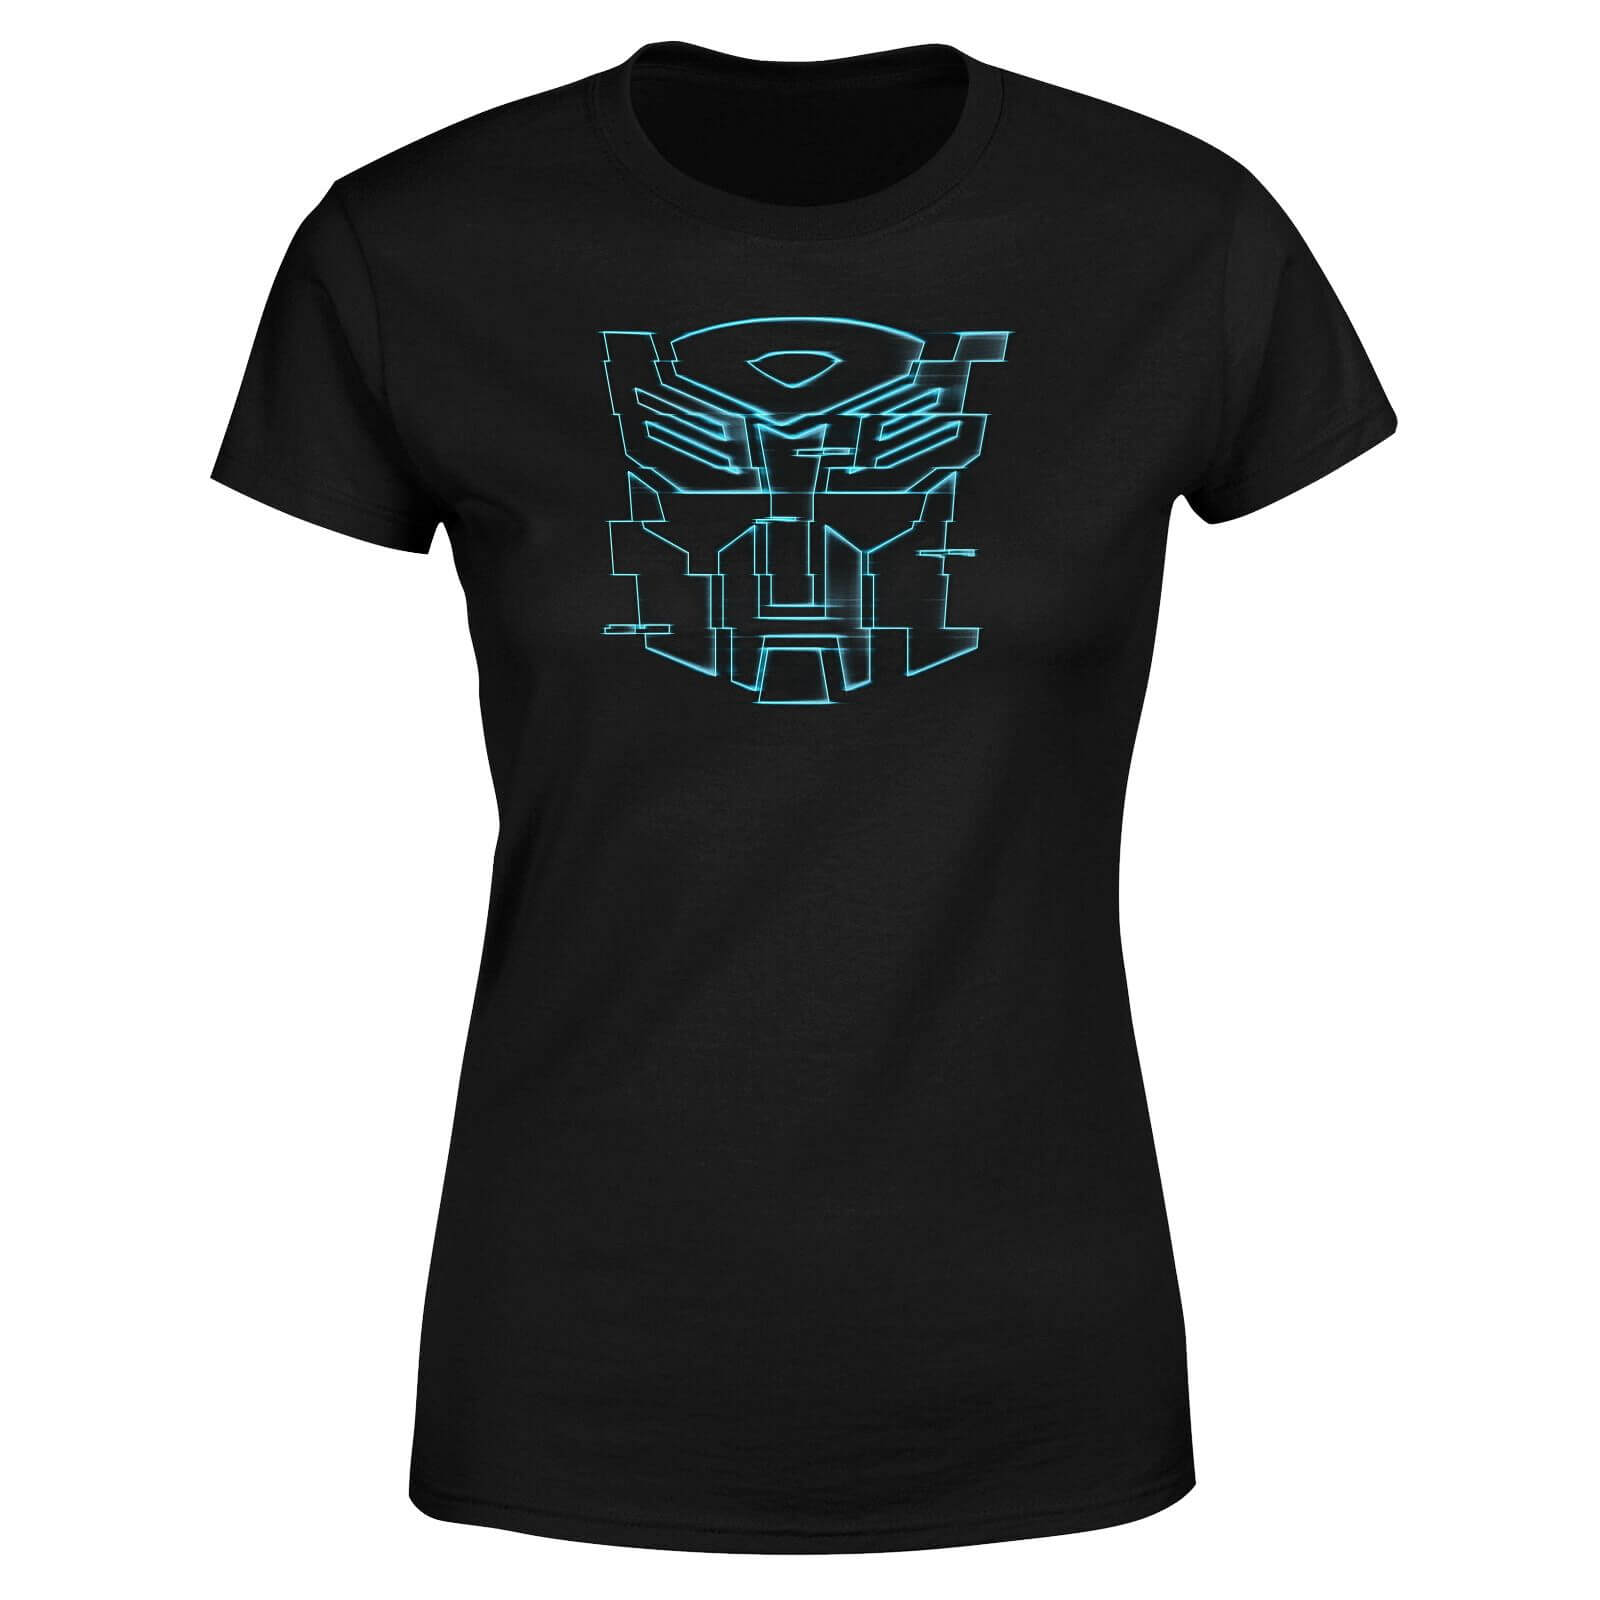 Transformers Autobot Glitch Women's T-Shirt - Black - S - Black